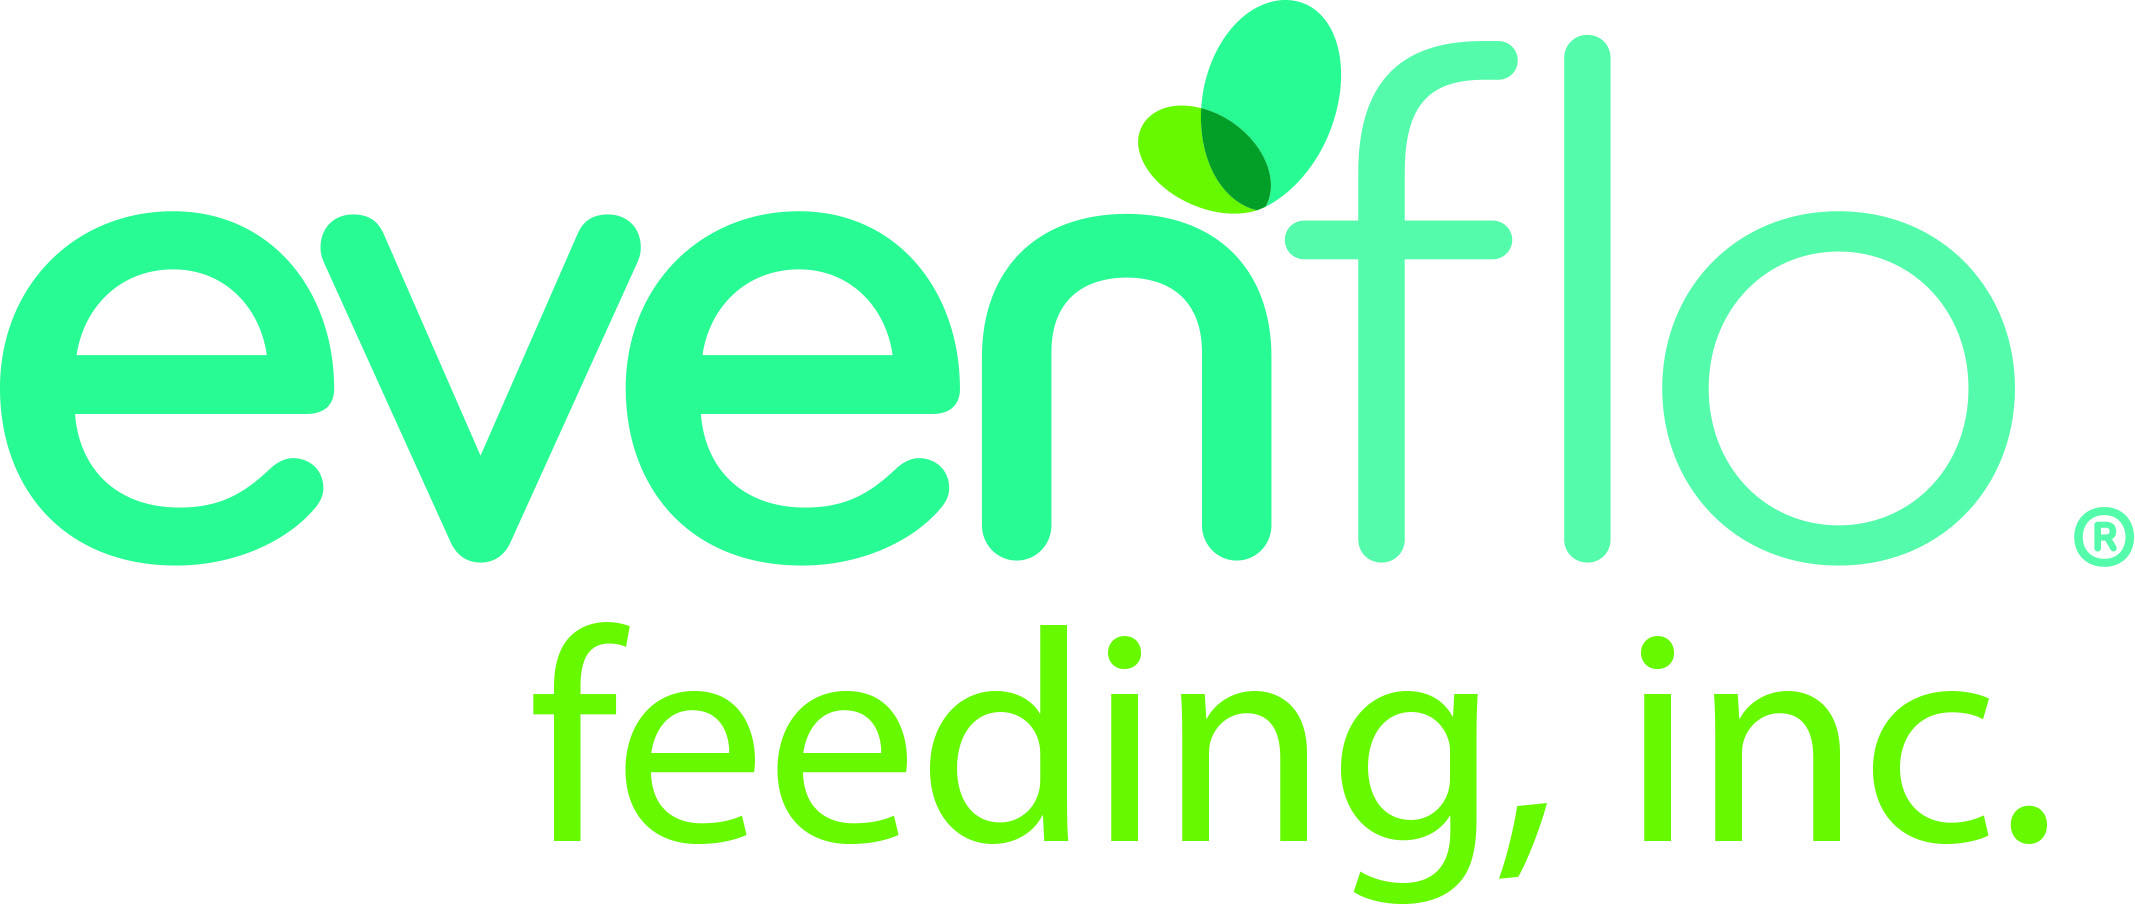 Evenflo Logo - EVENFLO FEEDING, INC. - West Chester, OH - Company Data